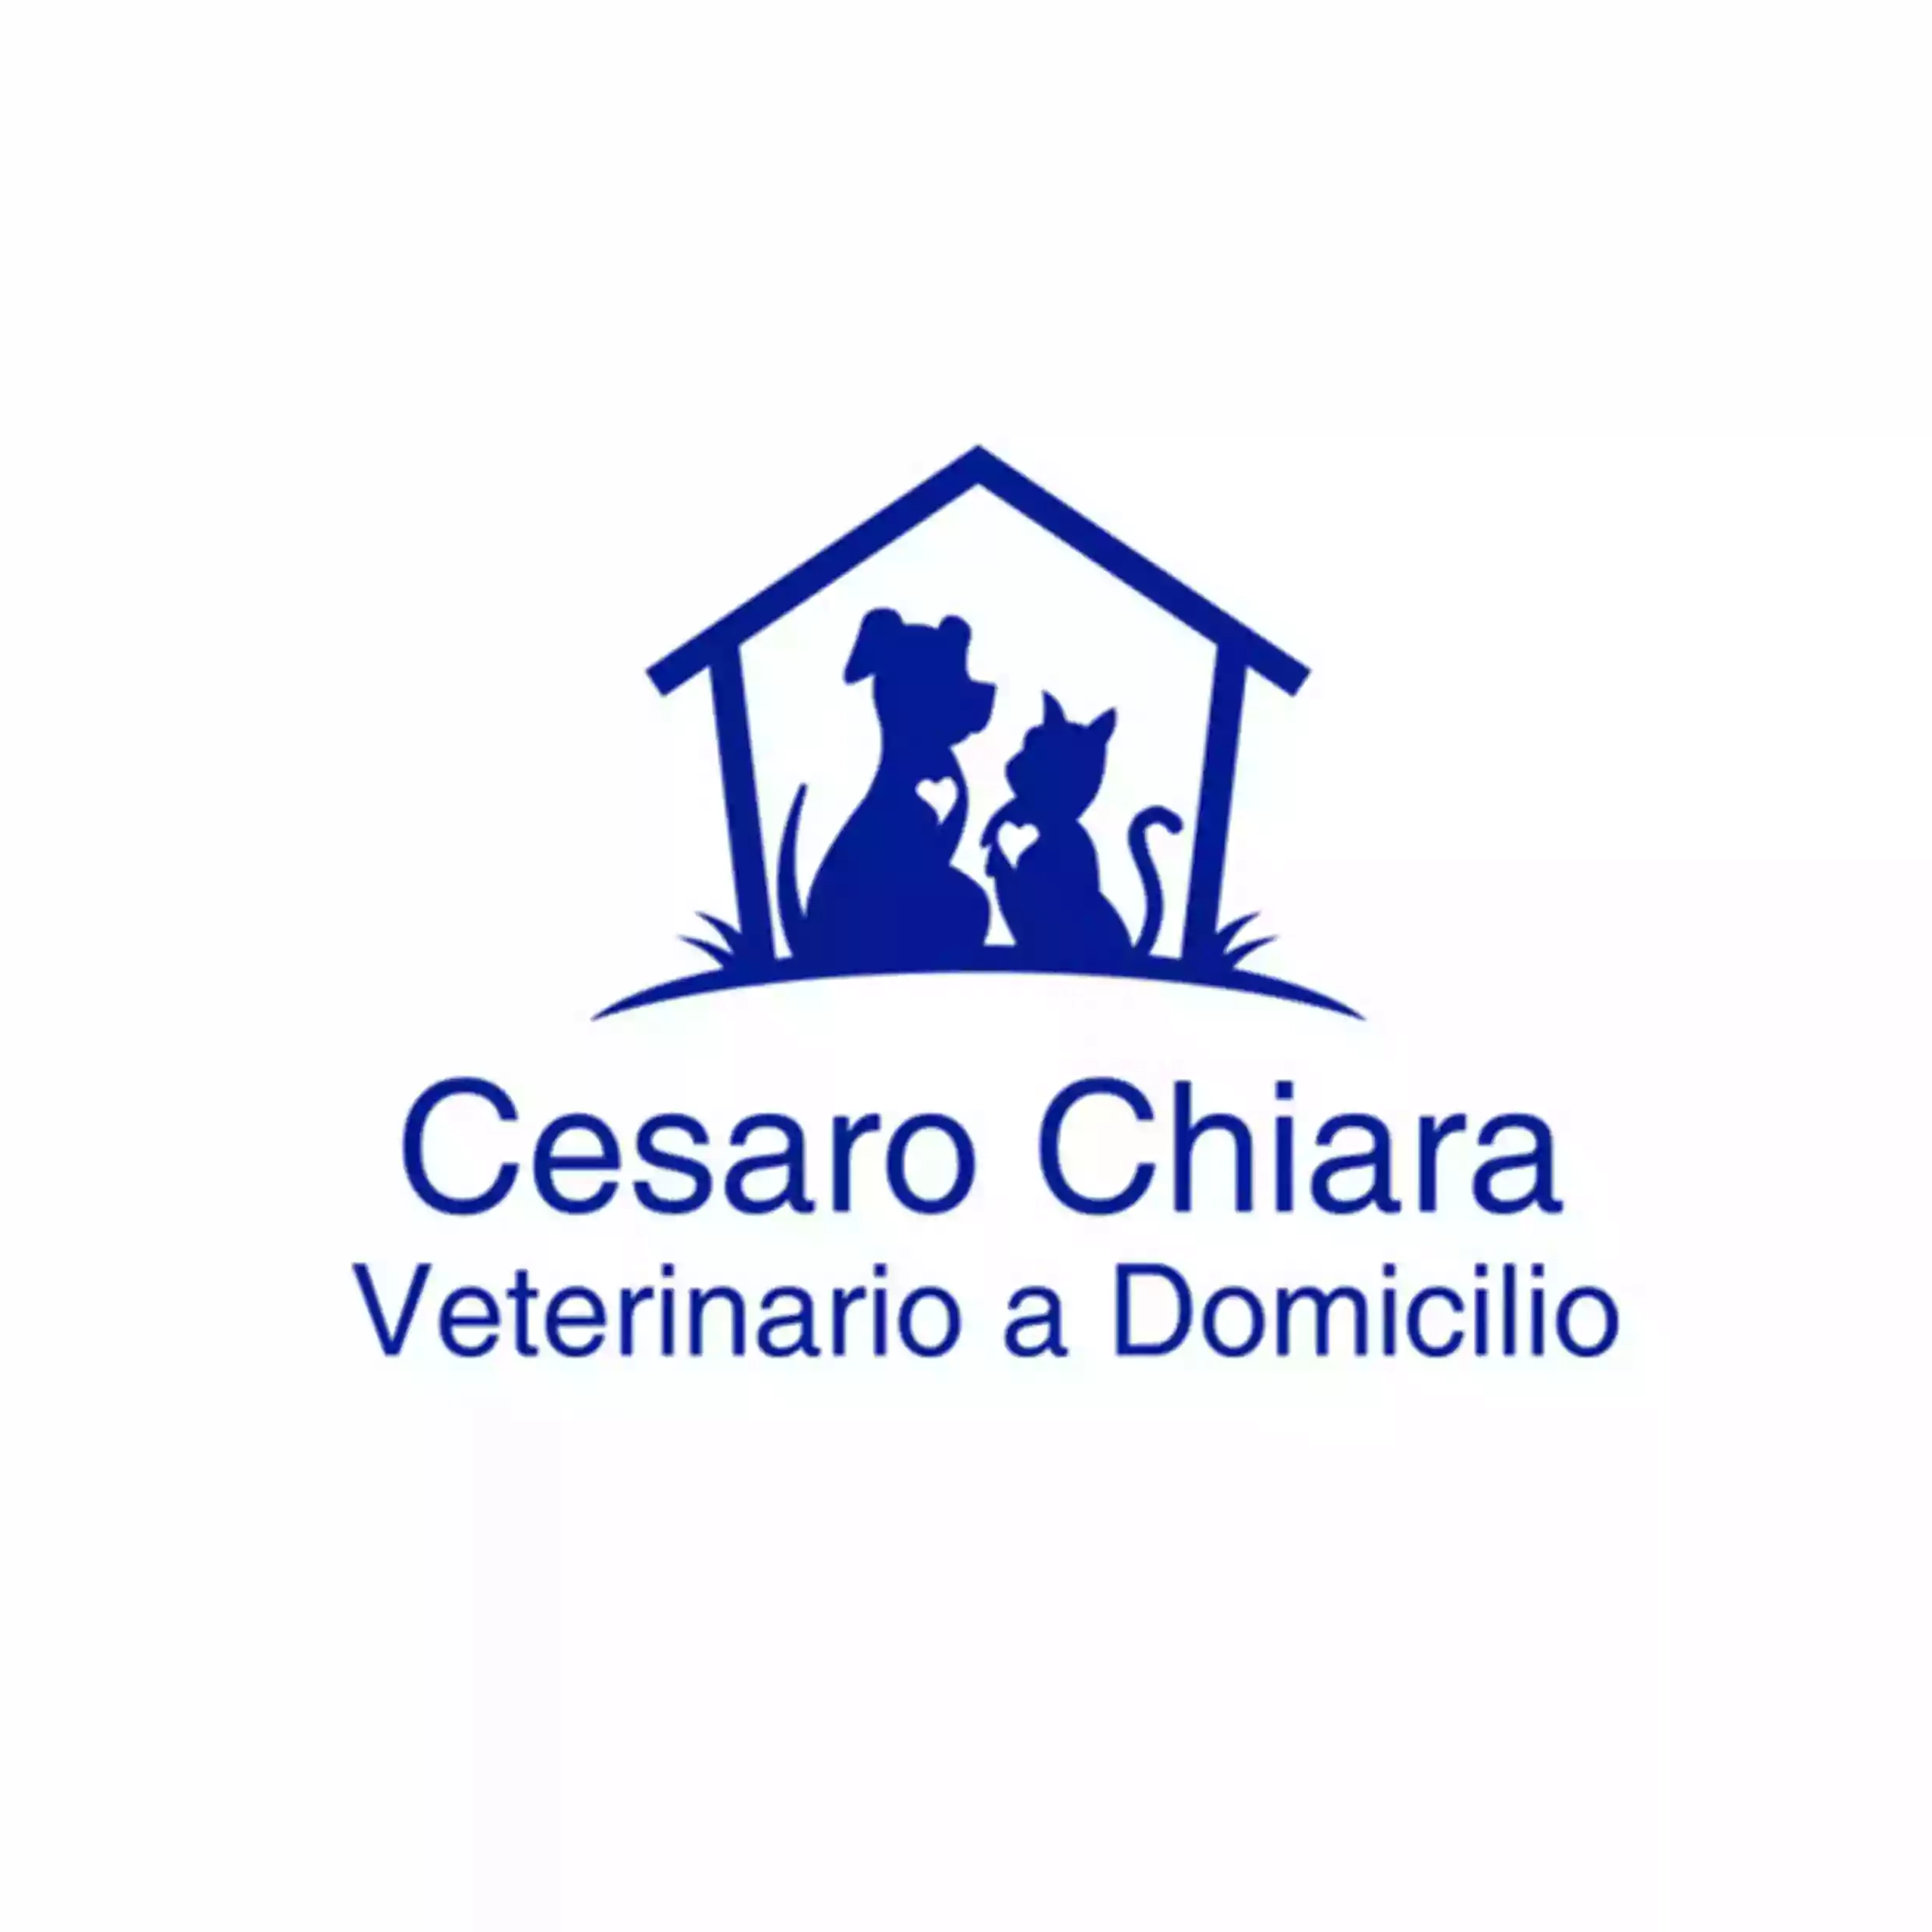 Veterinario a Domicilio - Cesaro Chiara